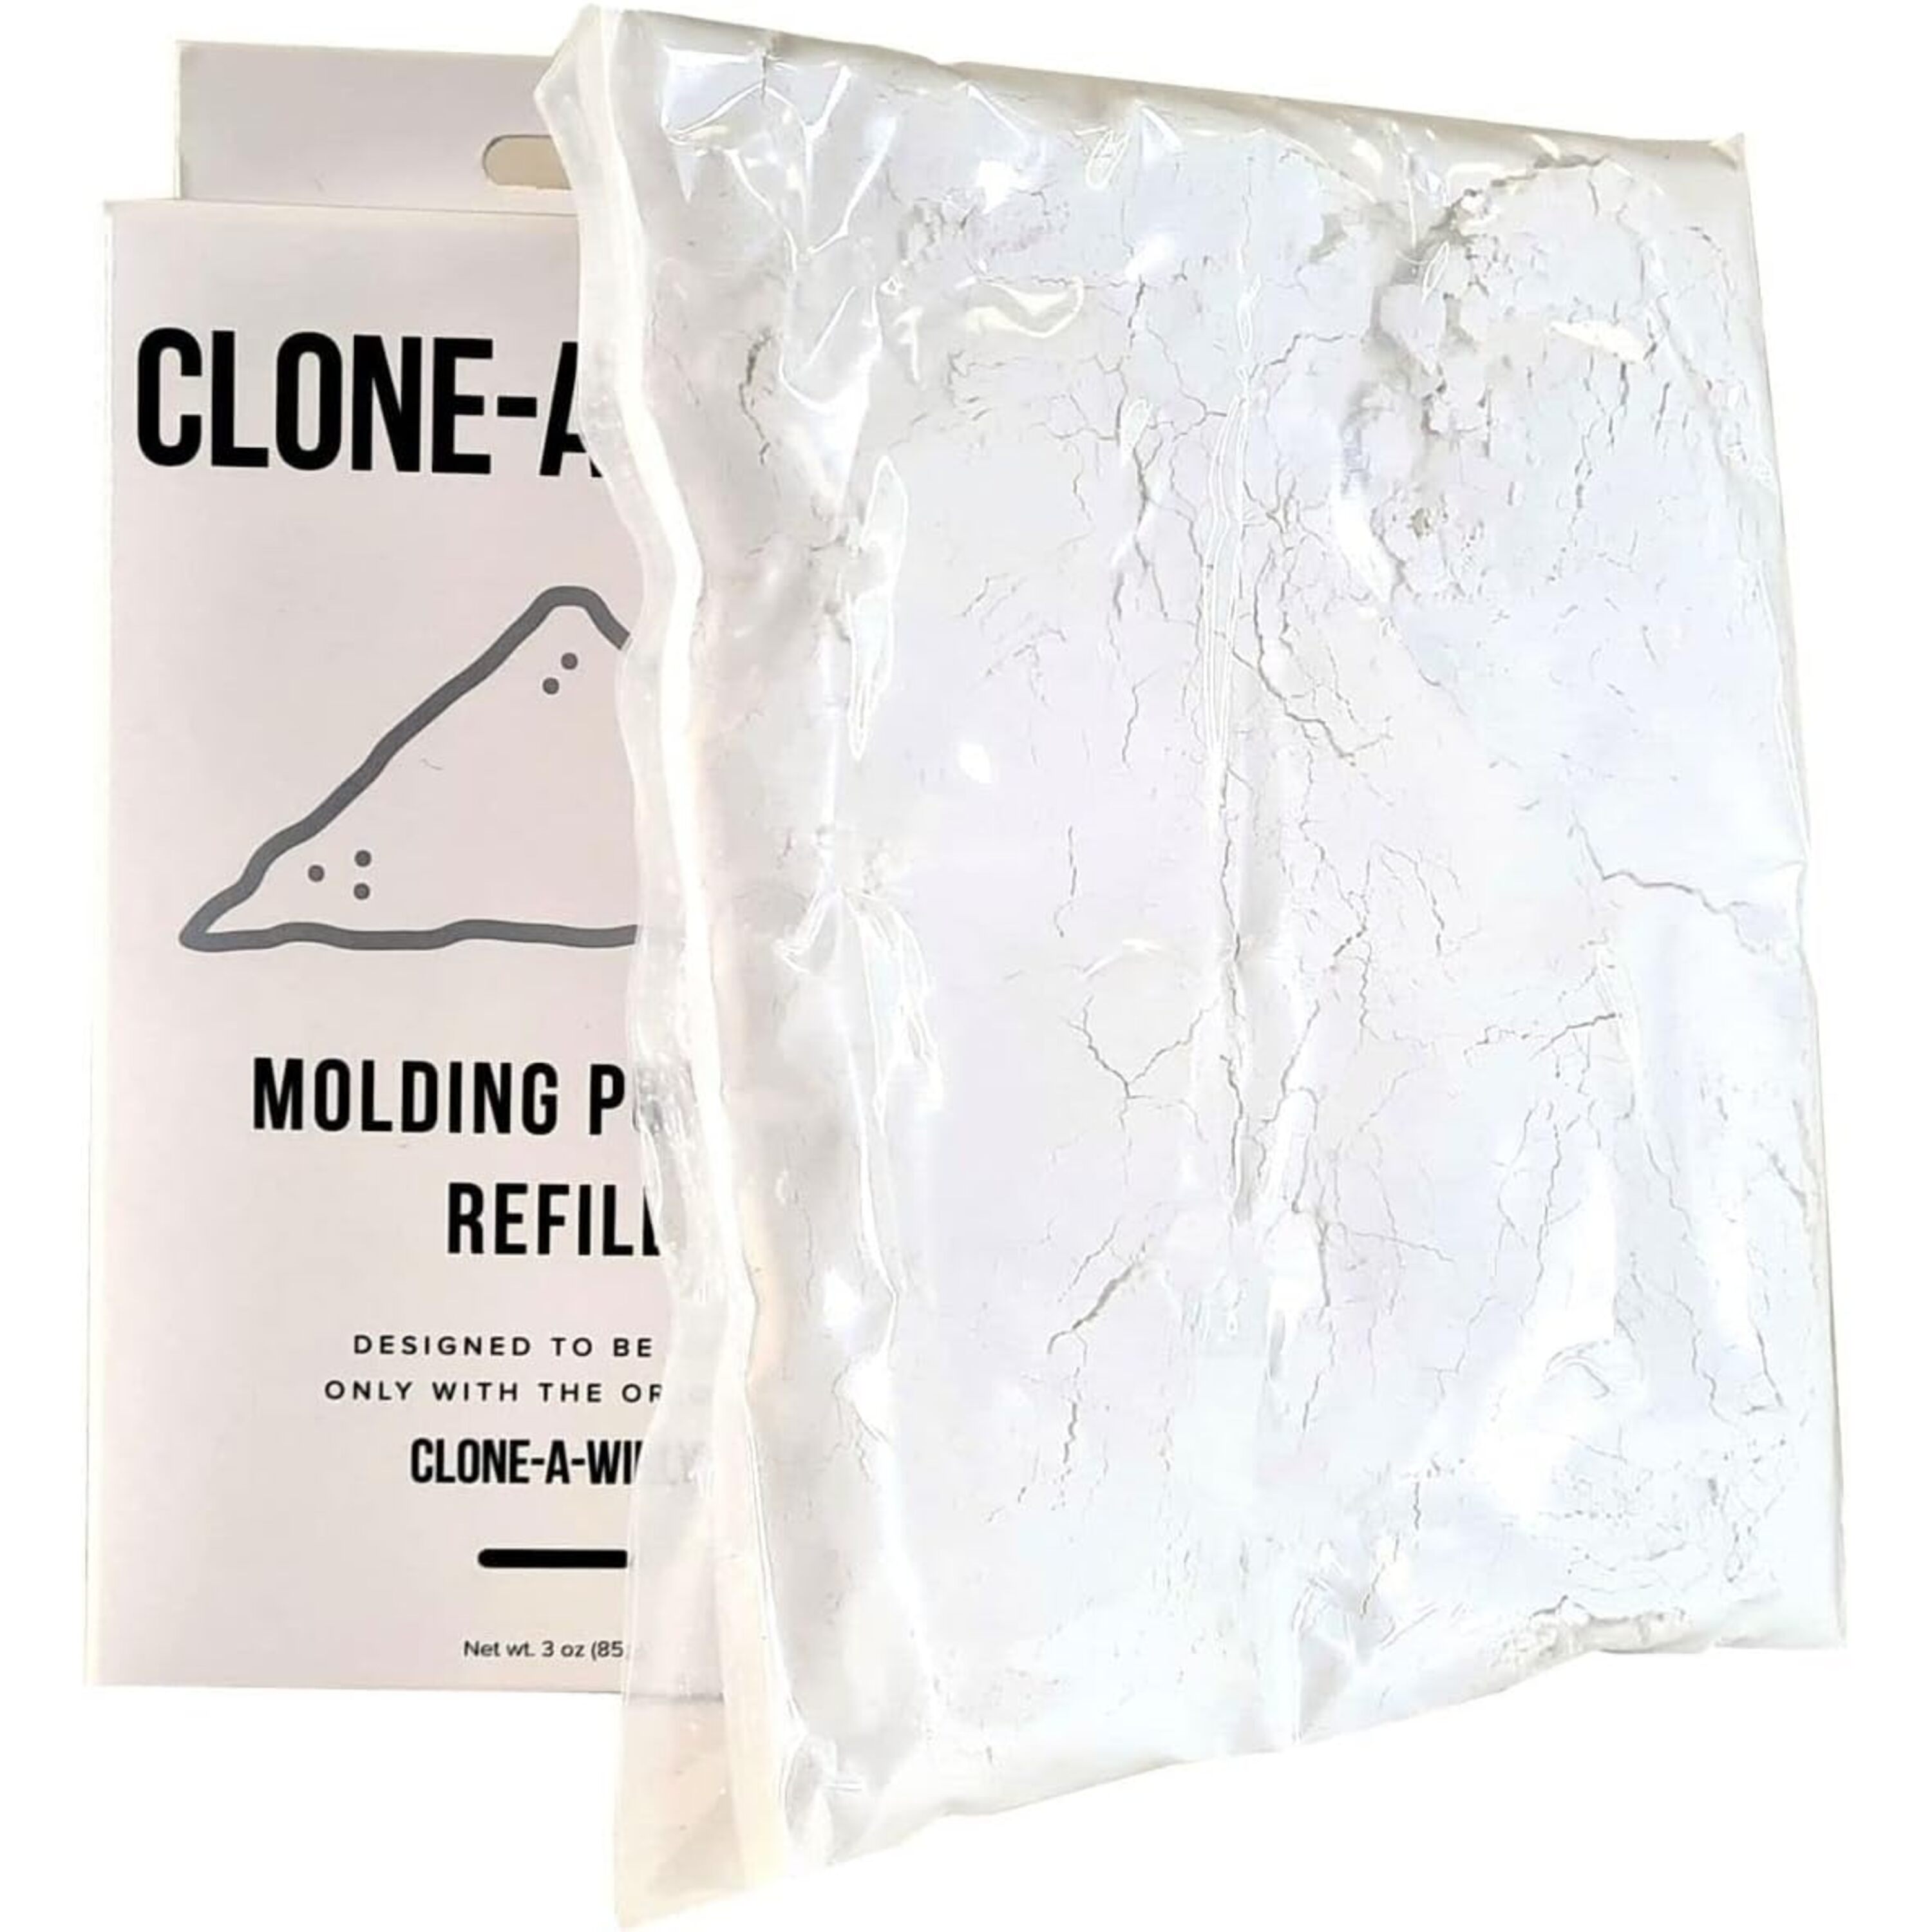 Clone-A-Willy Original Molding Power Refill 3oz - CAW Refill 763290898985